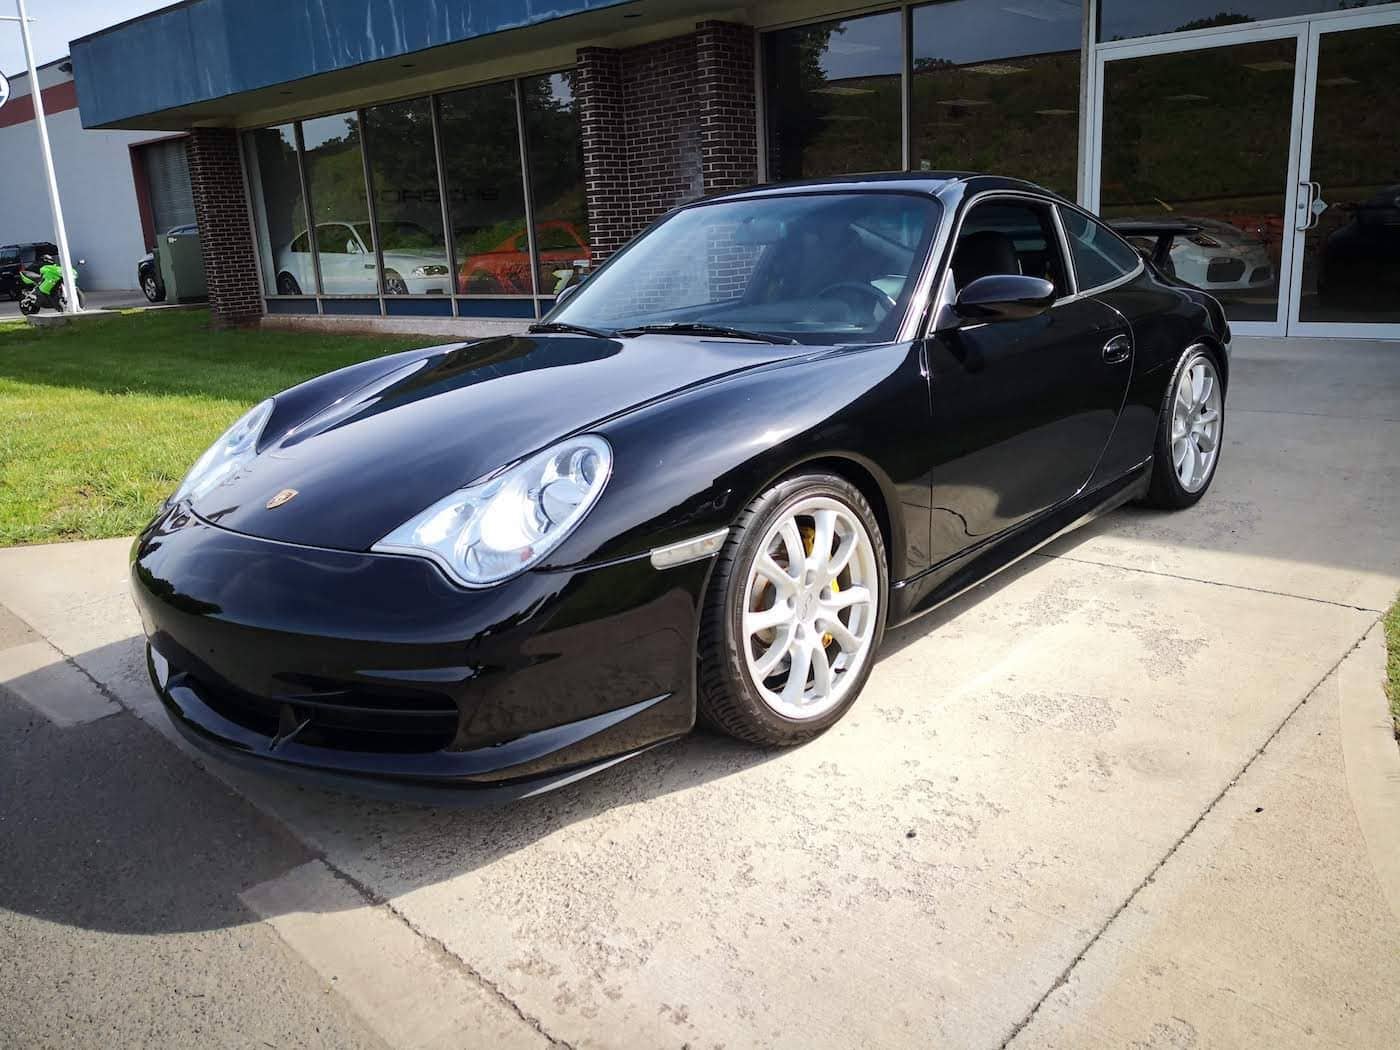 2004 Porsche GT3 - 2004 Porsche GT3 - Black / Black - 26k miles - Used - VIN WP0AC29934S692595 - 26,348 Miles - 6 cyl - 2WD - Manual - Black - Blauvelt, NY 10913, United States